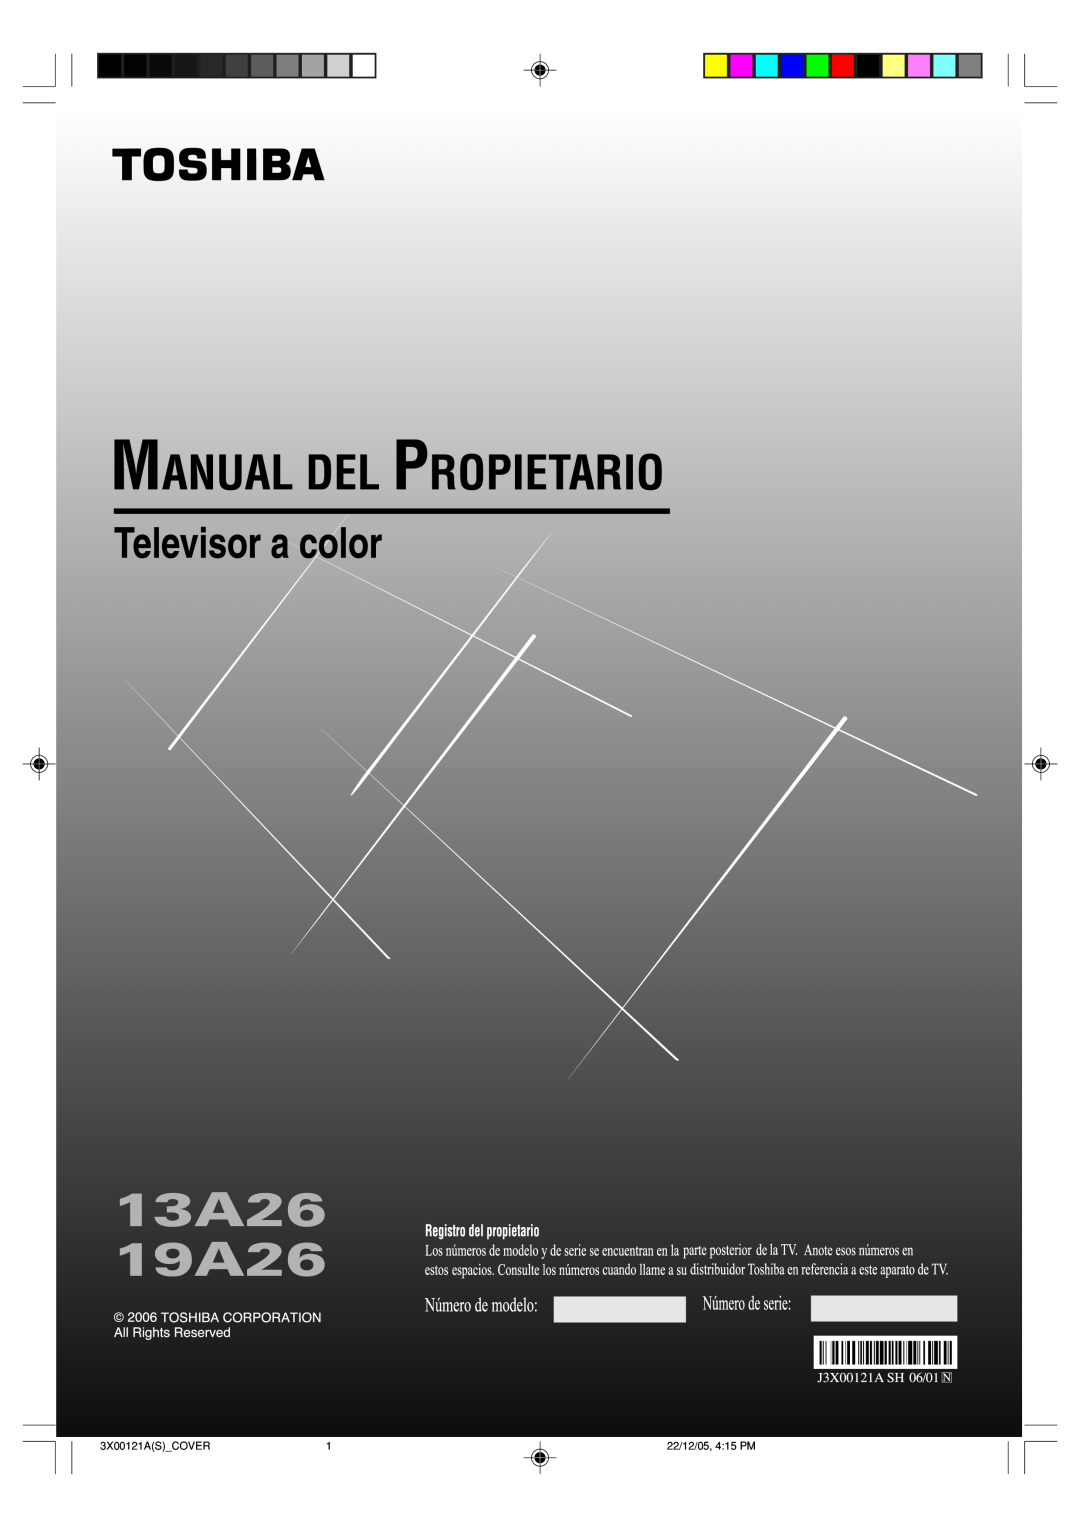 Toshiba manual 13A26 19A26, 3X00121ASCOVER, 22/12/05, 415 PM 